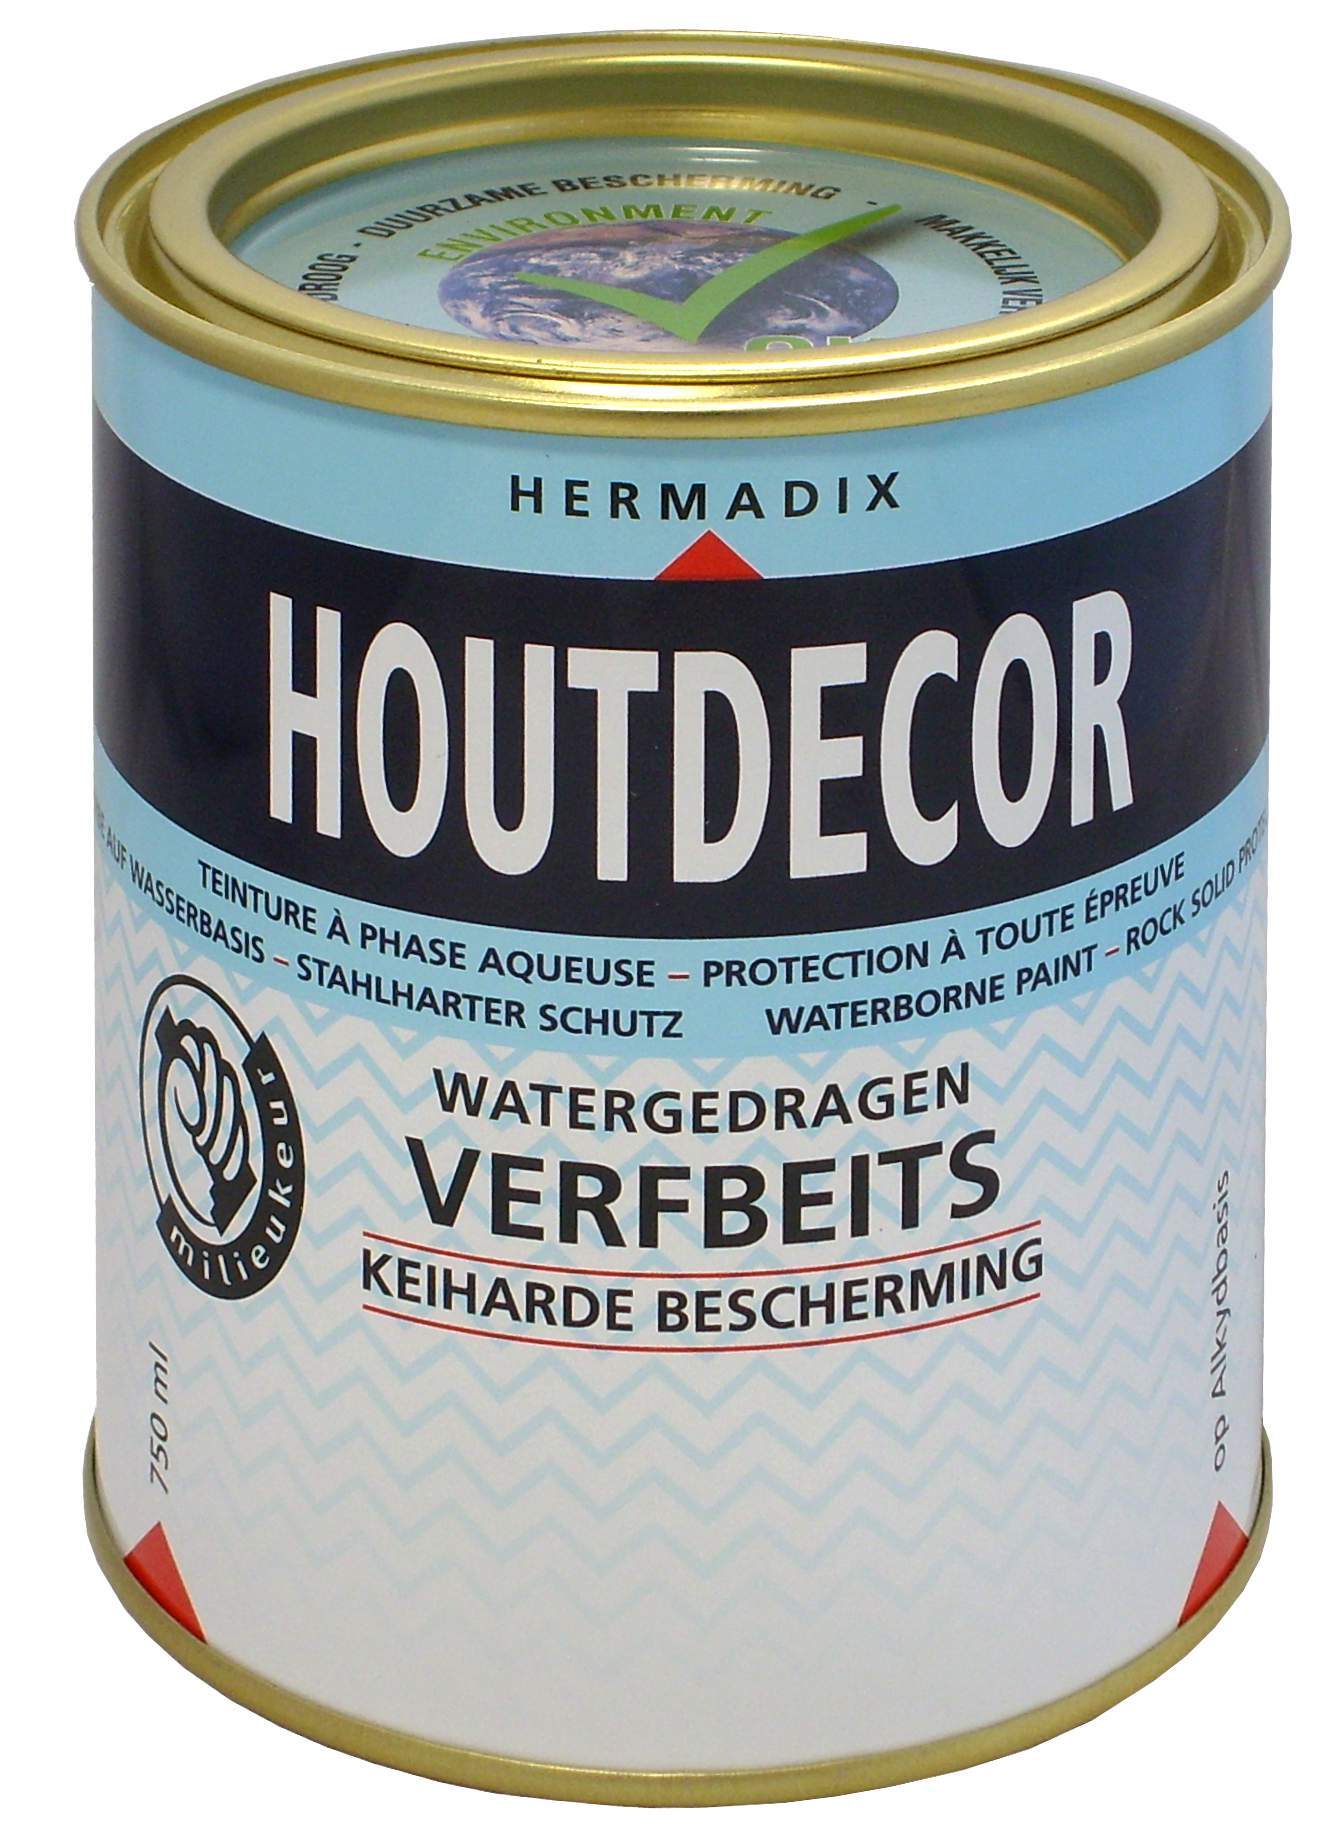 Hermadix Houtdecor Transparante Beits - 0,75 liter - Eiken